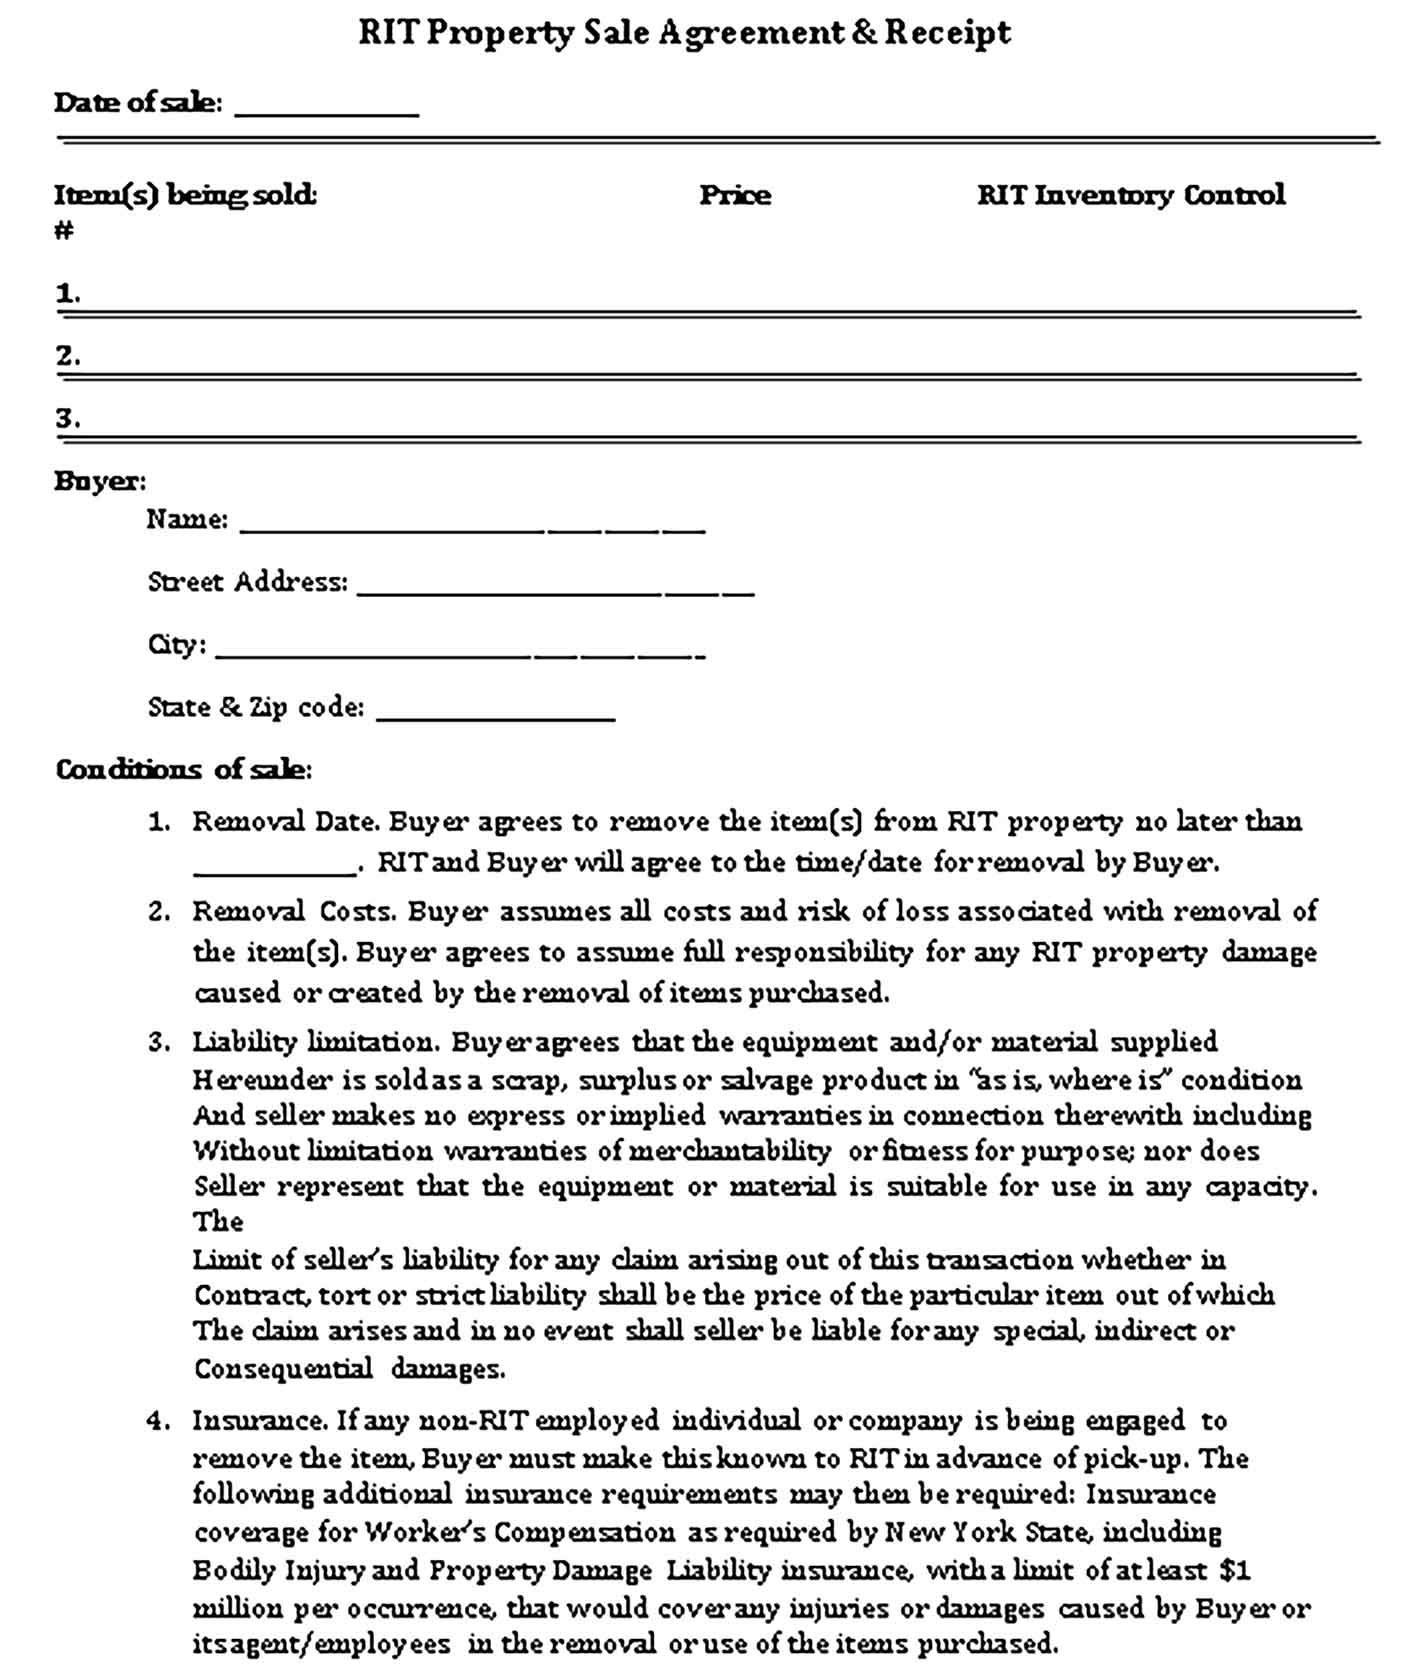 Sample Property Sale Agreement Receipt Templates